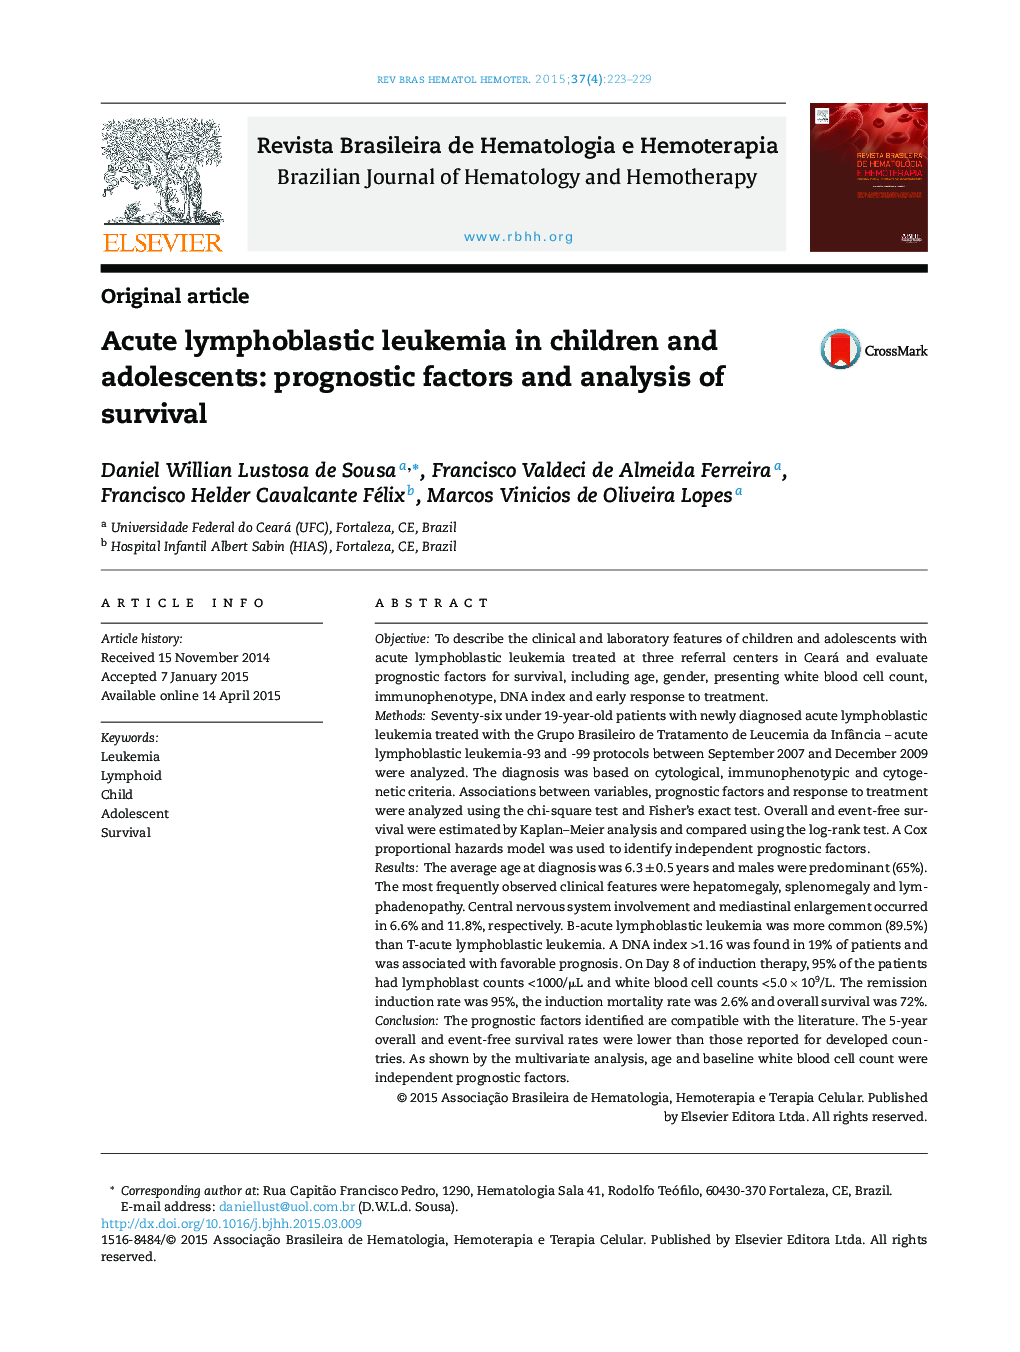 Acute lymphoblastic leukemia in children and adolescents: prognostic factors and analysis of survival